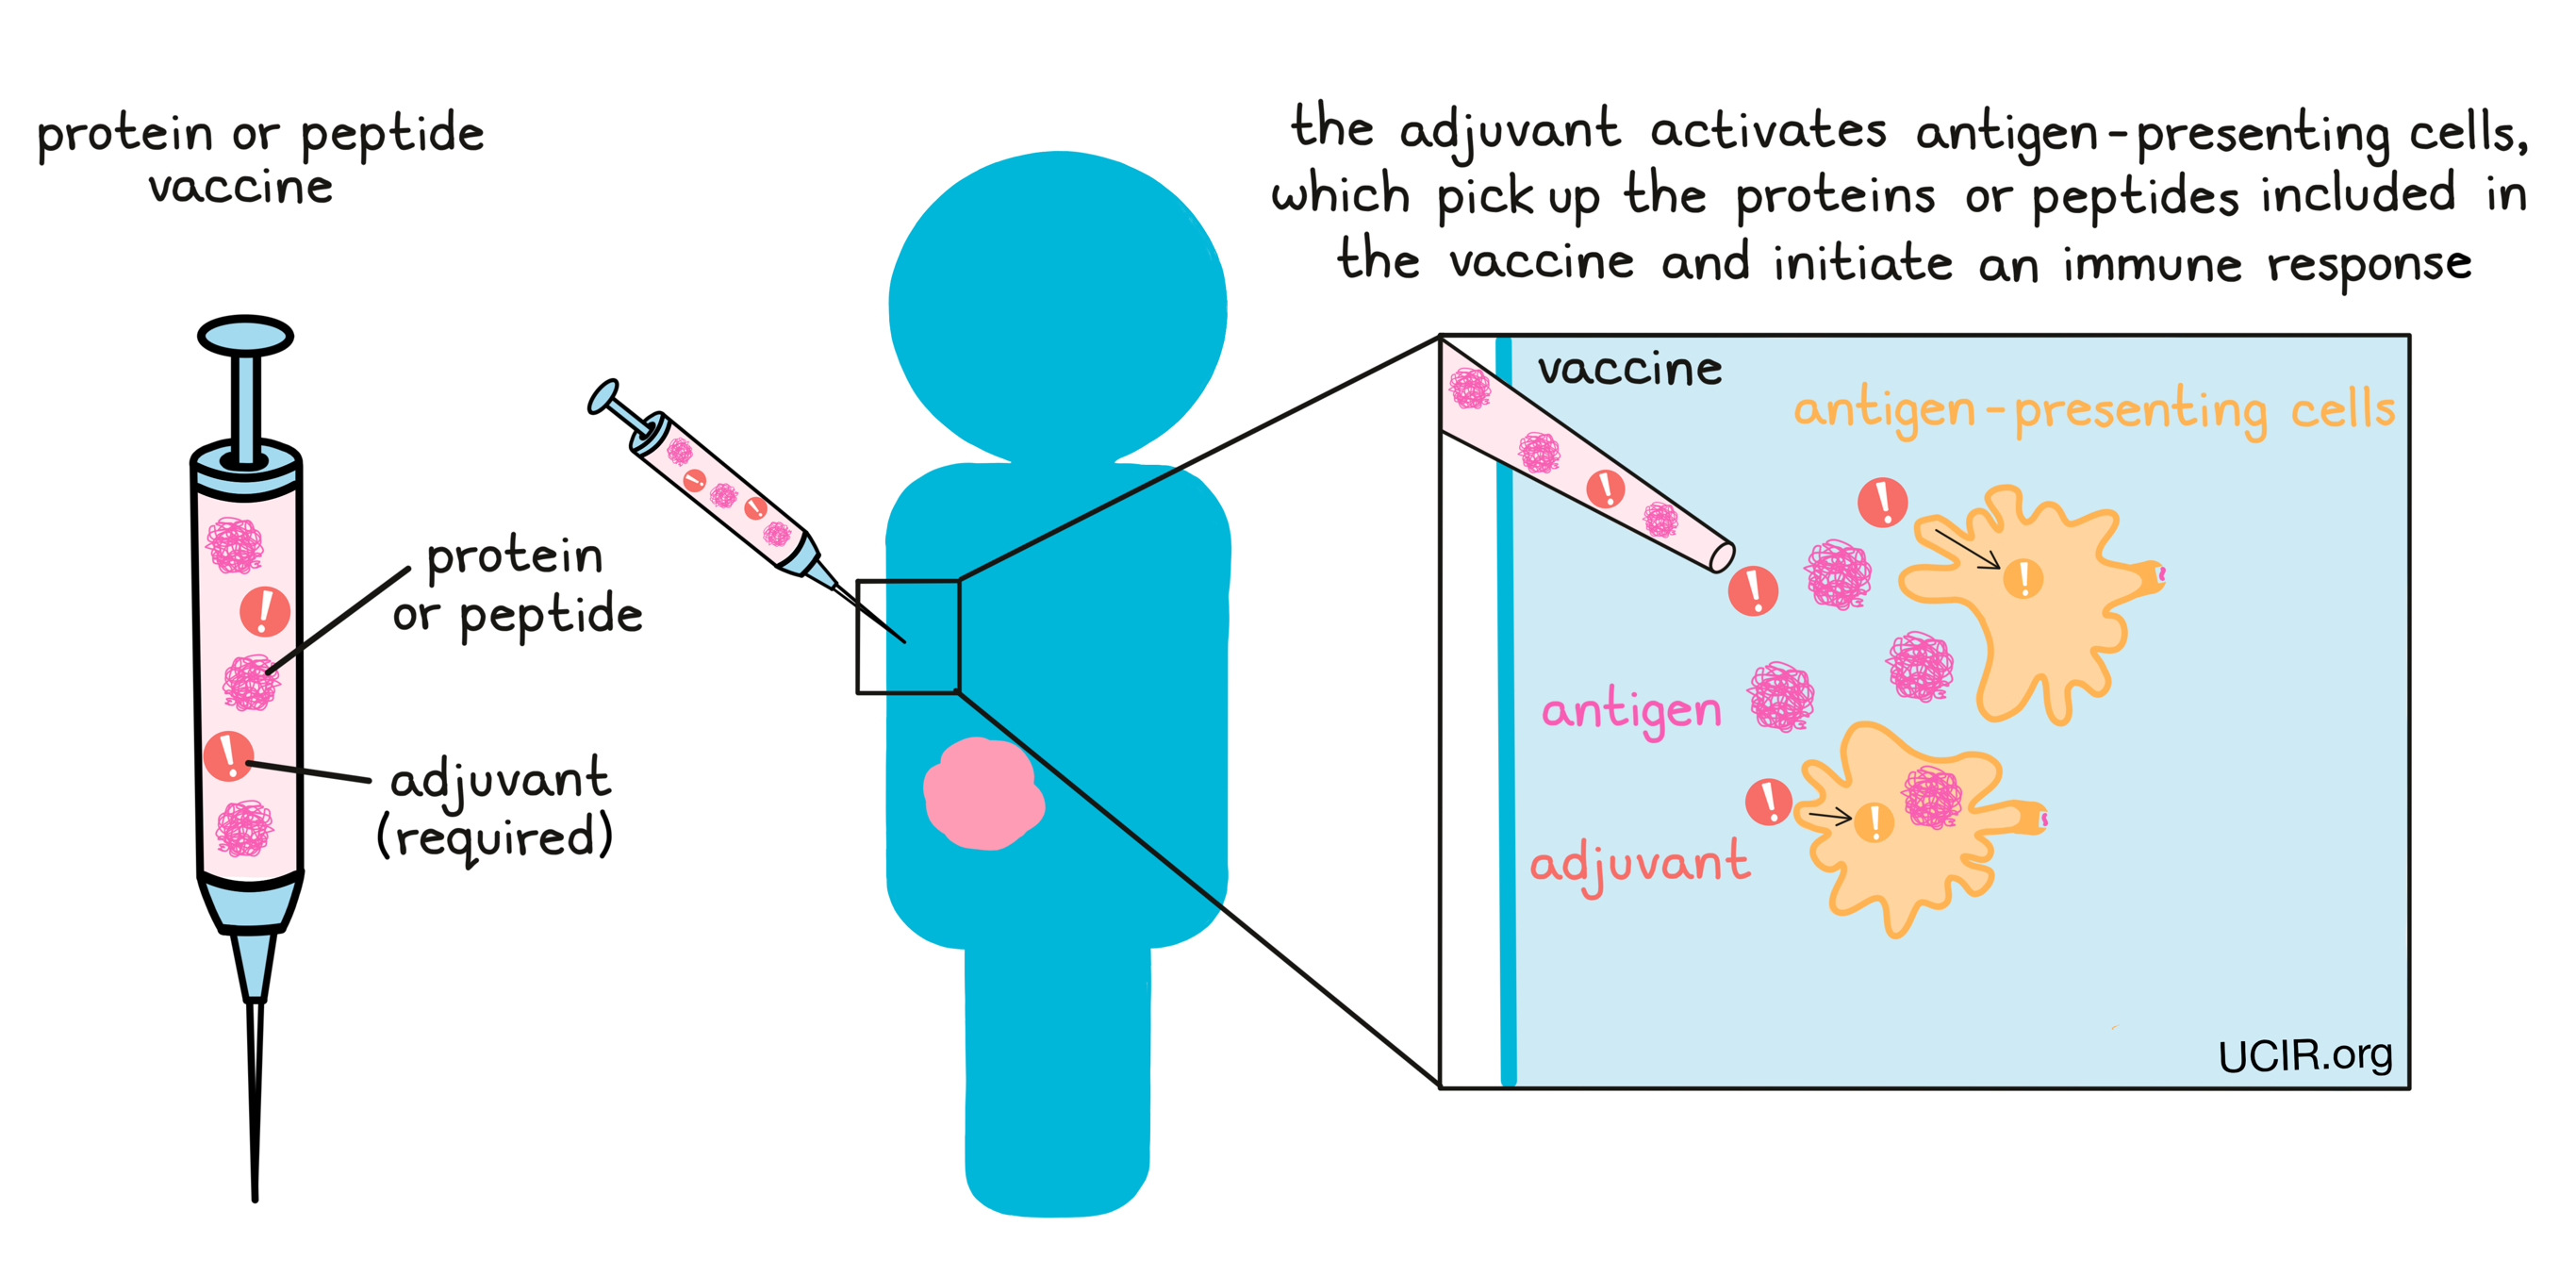 The adjuvant activates antigen-presenting cells